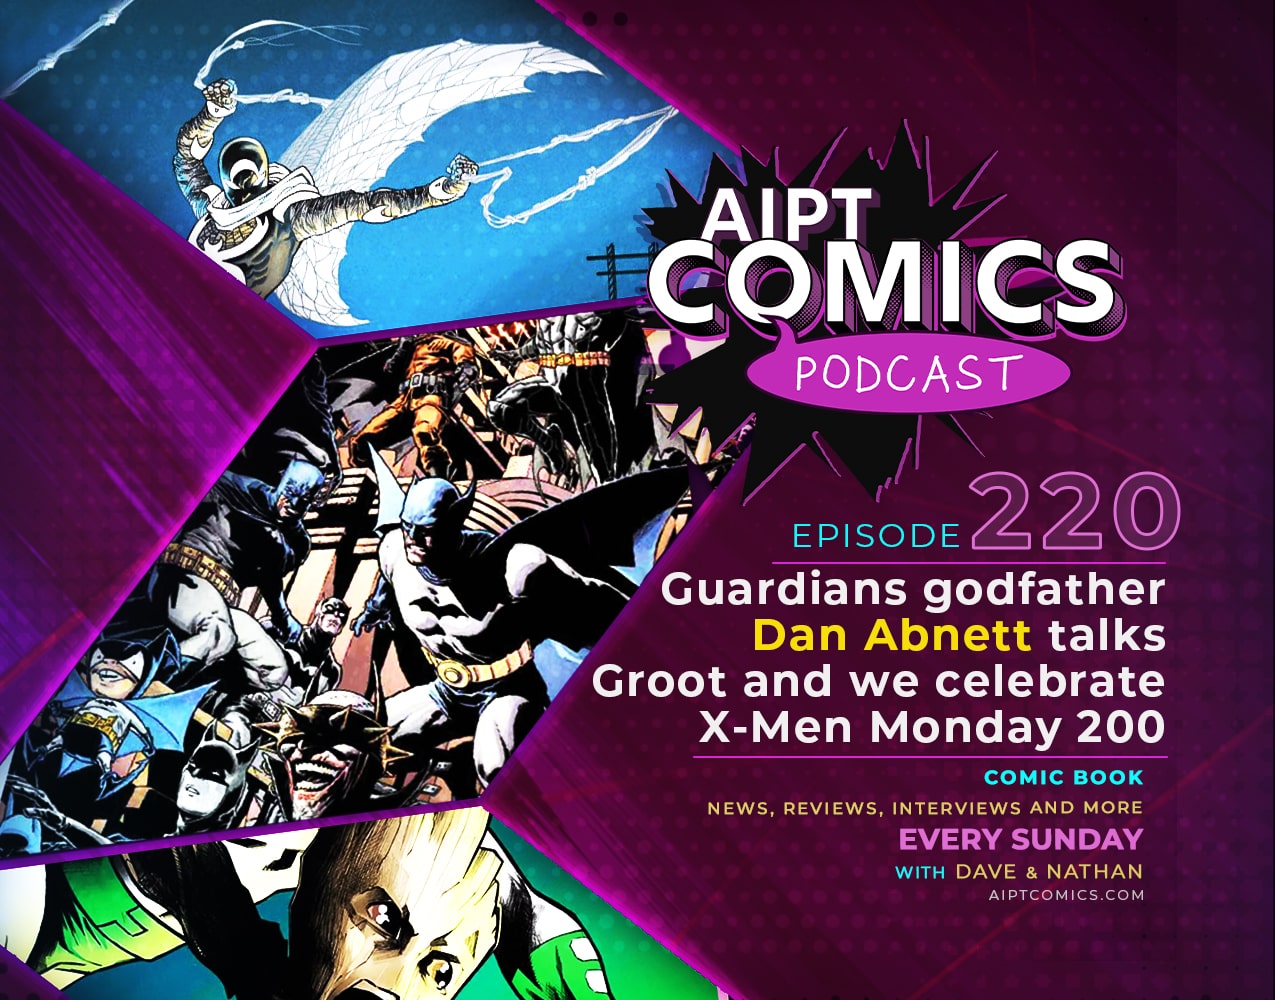 AIPT Comics Podcast episode 220: Guardians godfather Dan Abnett talks ‘Groot’ and we celebrate X-Men Monday 200